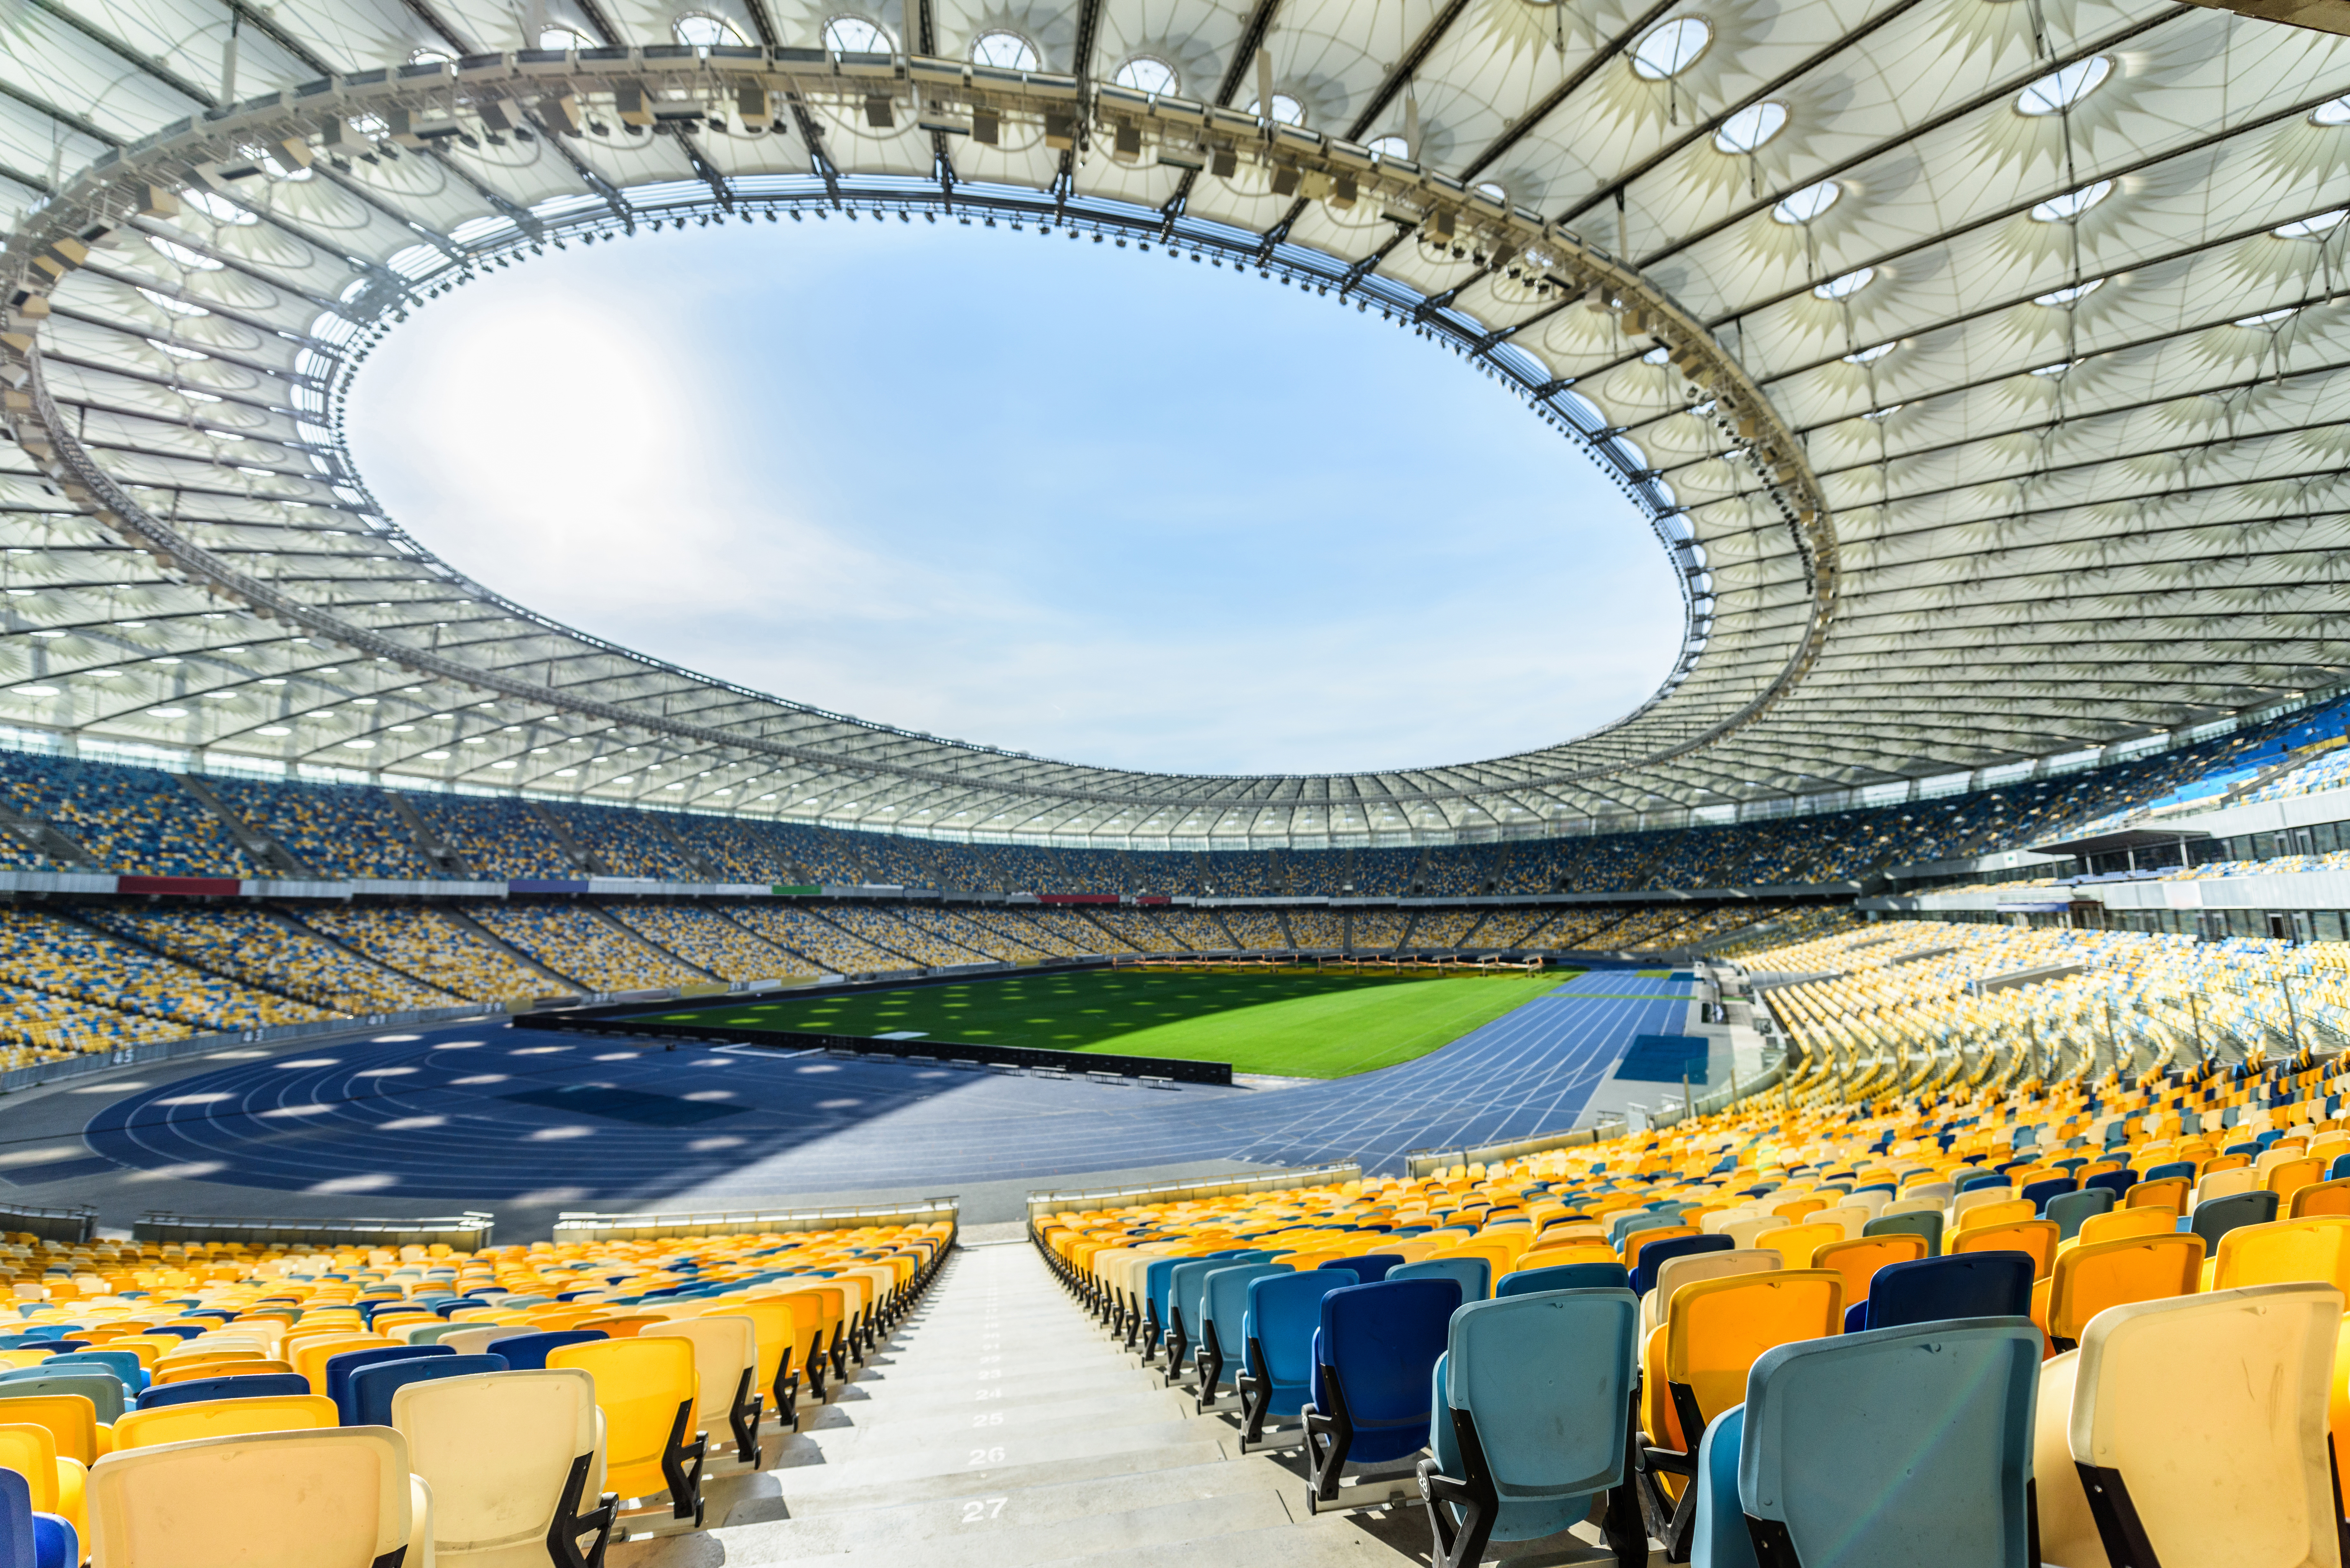 Rows of yellow and blue stadium seats on soccer fi 2021 04 05 09 40 17 utc